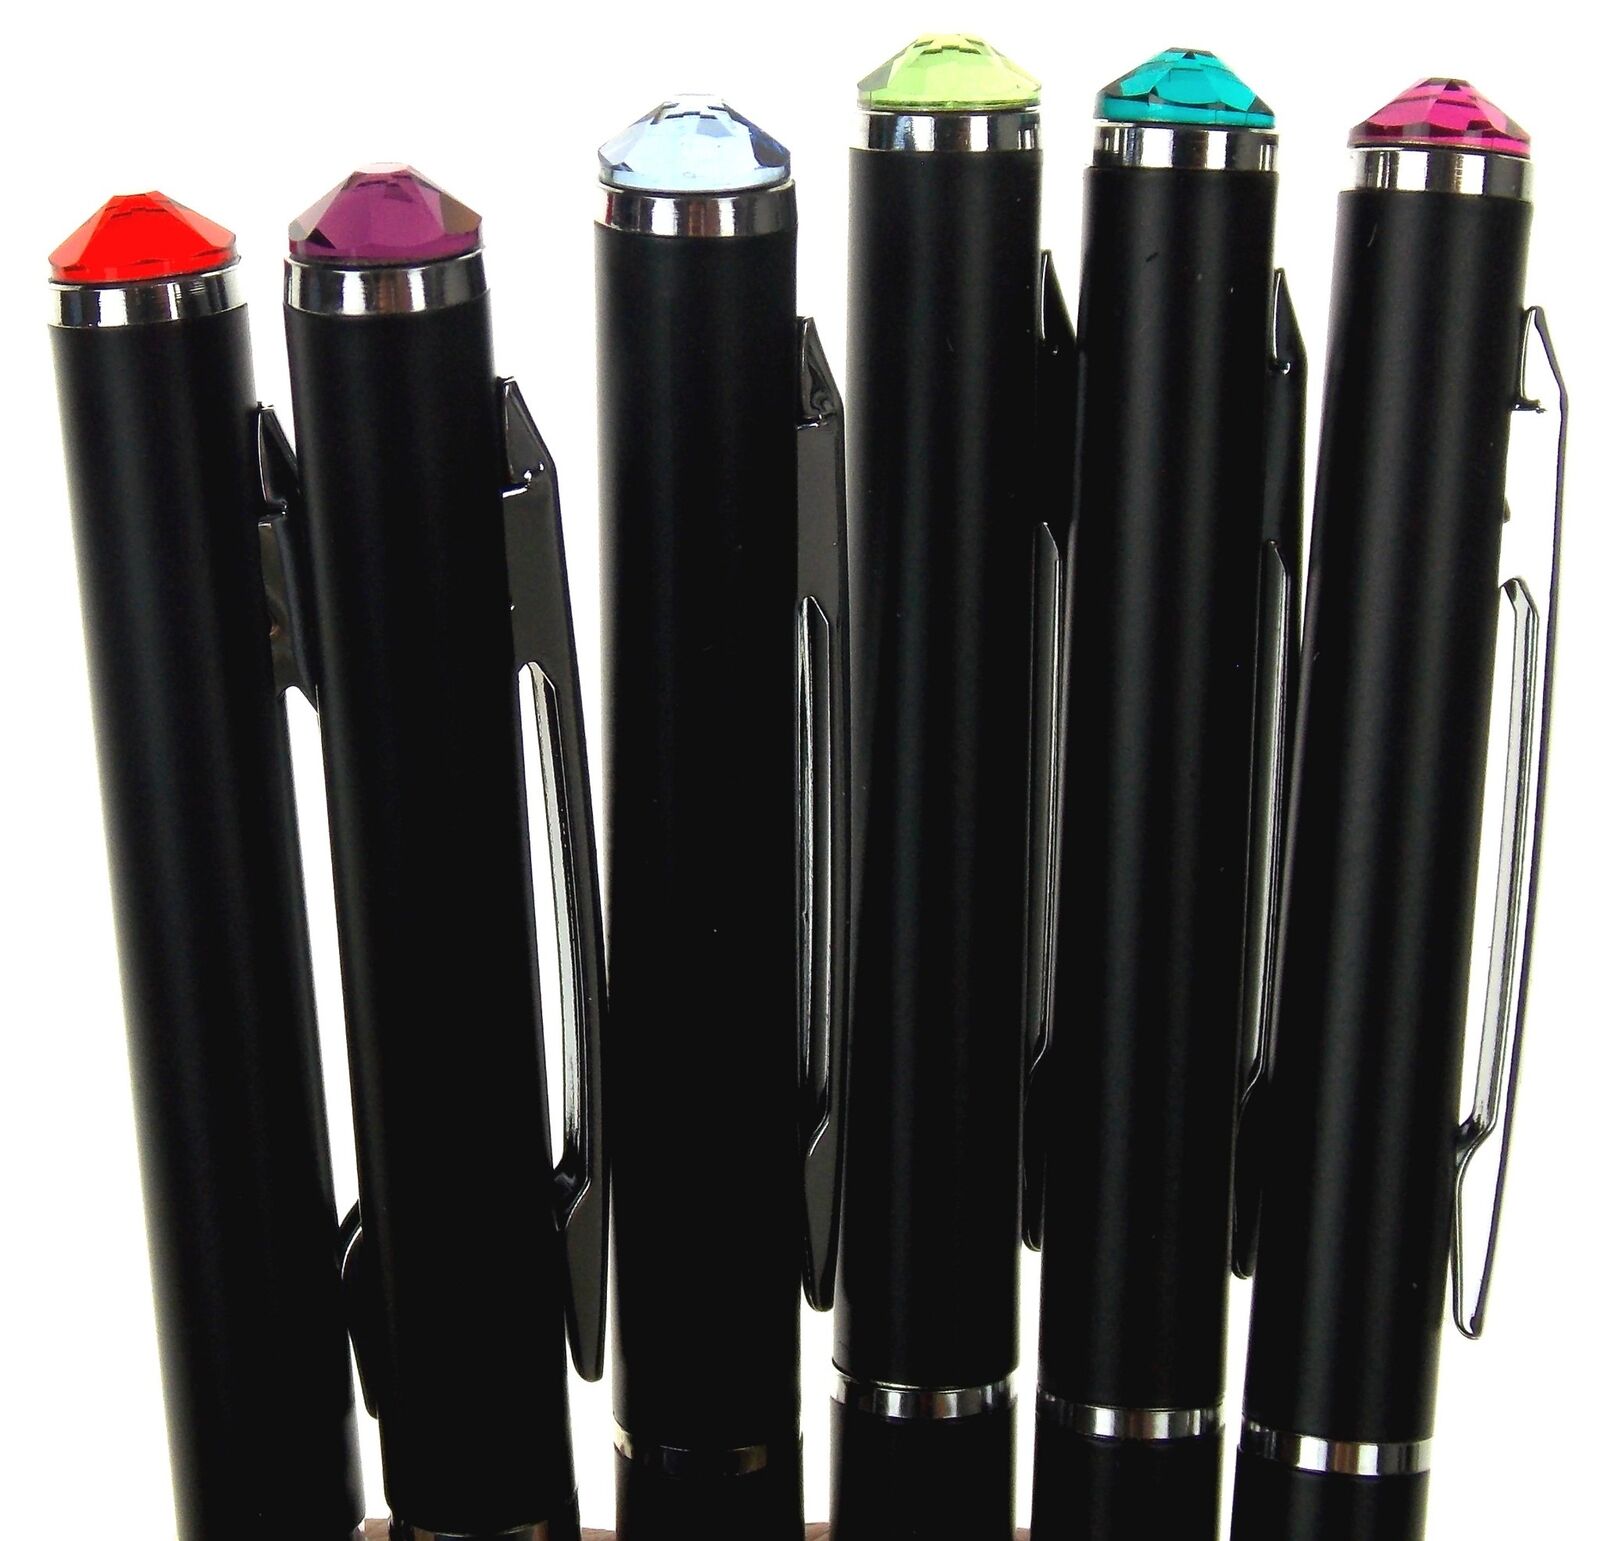 Crystalicious Black Barrel Pen Set 6 Crystal Top Assorted Colors Executive Gift